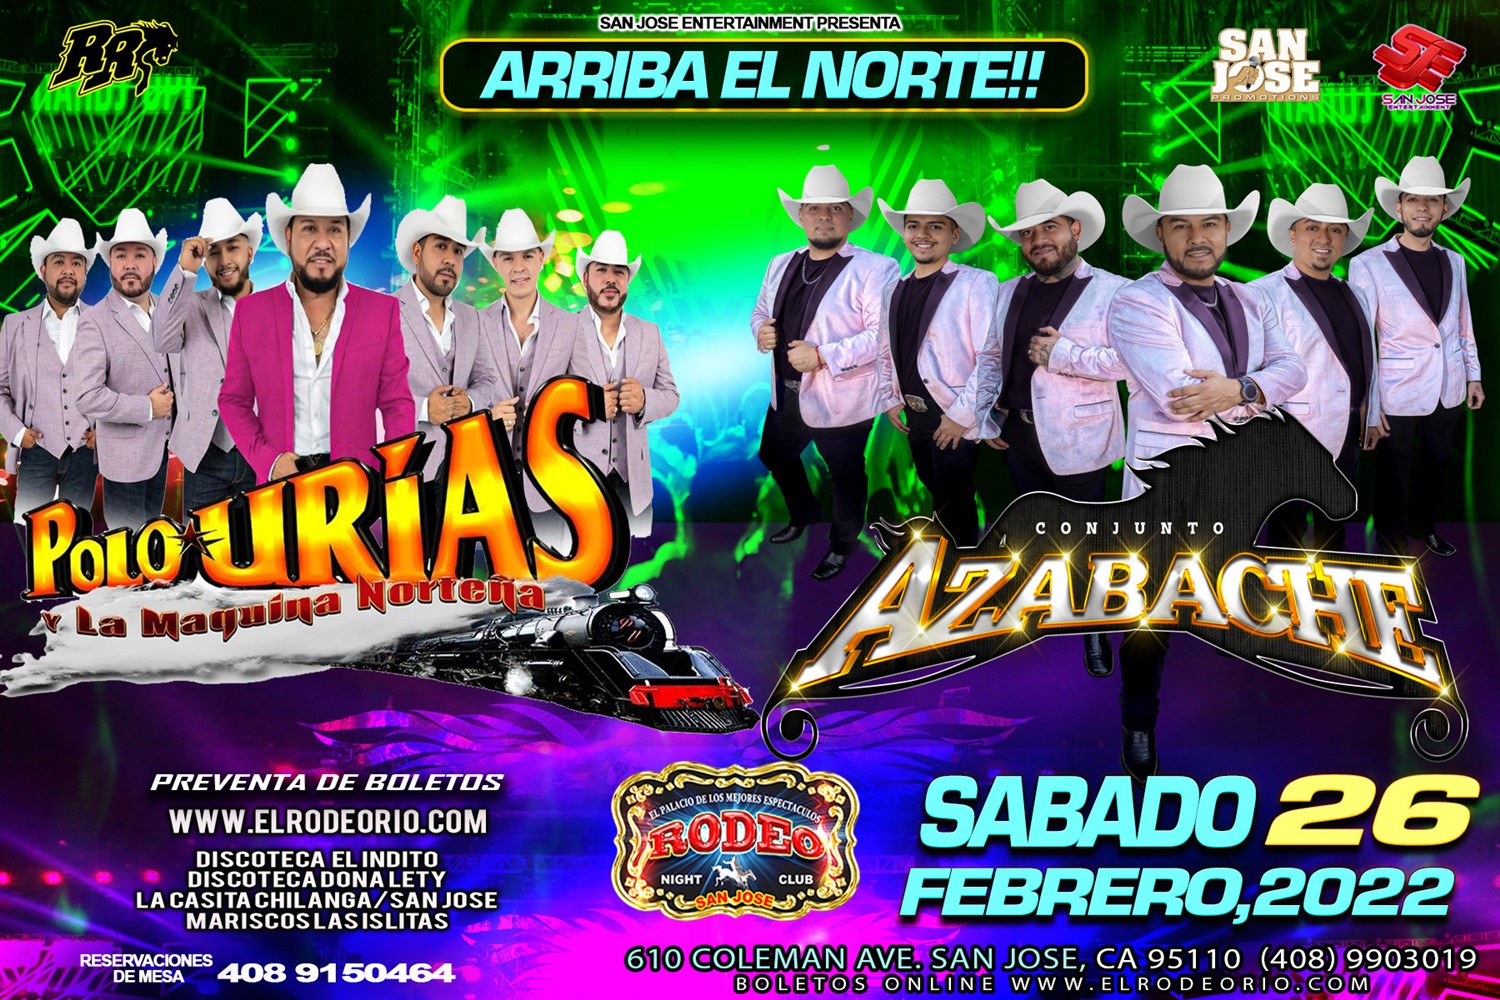 Polo Urias y Conjunto Azabache,Club Rodeo de San Jose  on Feb 26, 21:00@Club Rodeo - Buy tickets and Get information on elrodeorio.com sanjoseentertainment